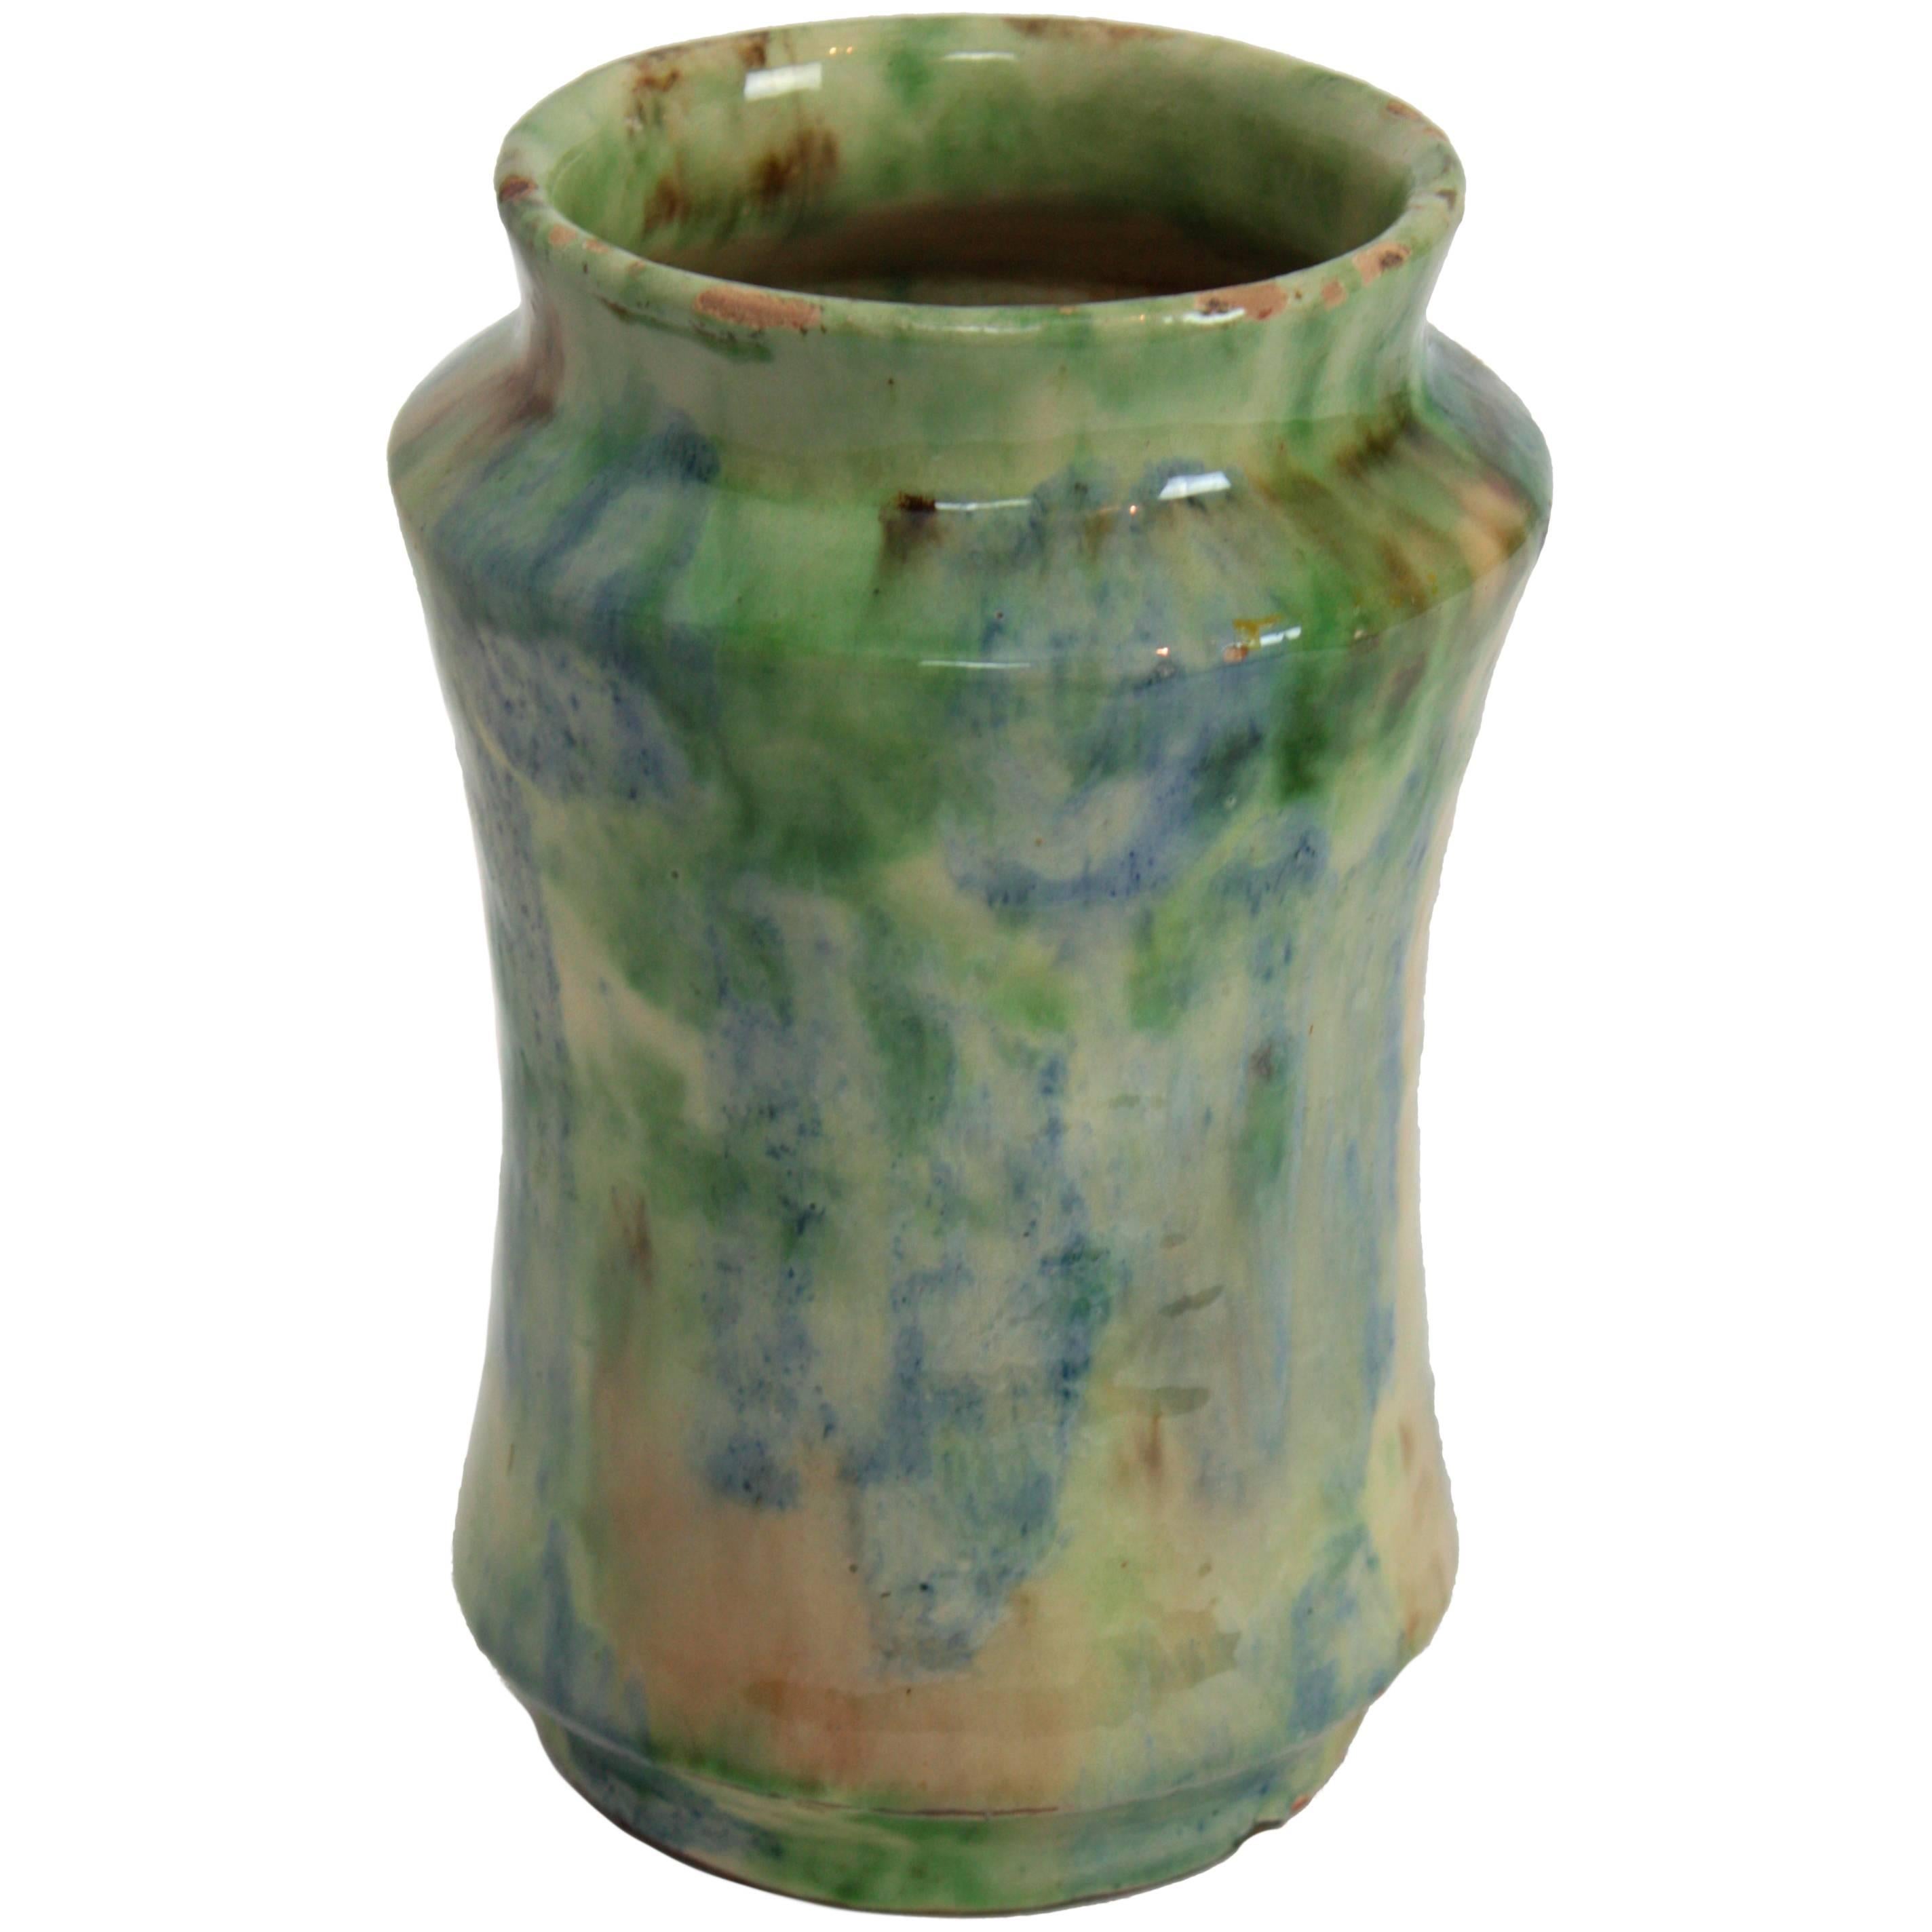 Glazed Terracotta vase in shades of green, blue, beige 
Traditional spanish glazed ceramic vase 